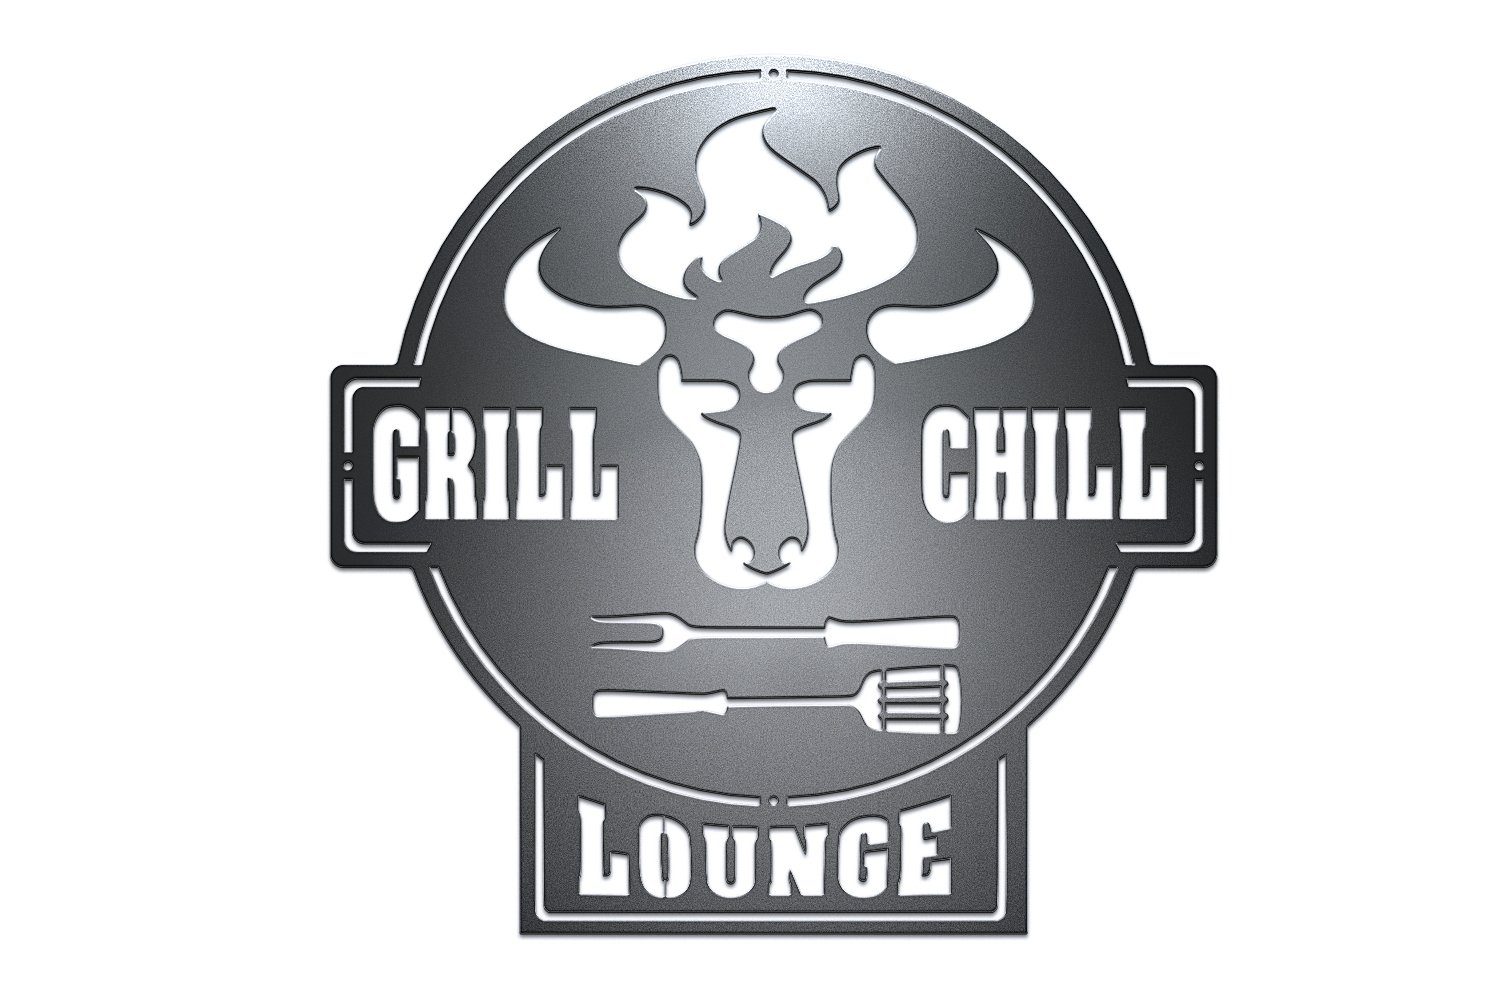 Stahl GC01-B Lounge Bulle Schwarz Grill Chill + Lounge & tuning-art Schild Grill Wanddekoobjekt Schwarz